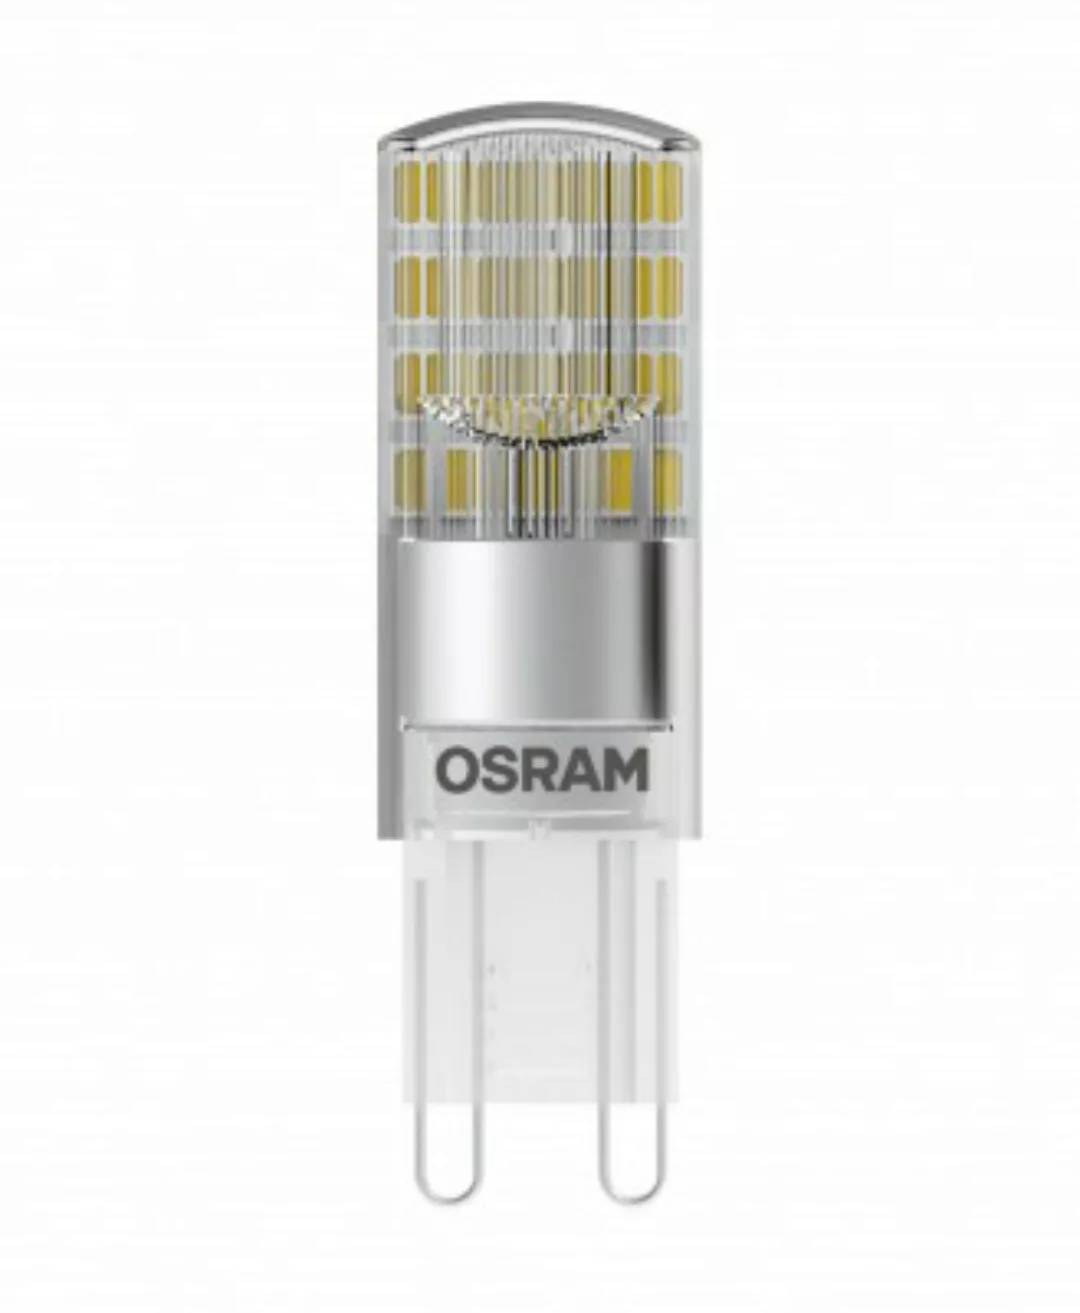 OSRAM LED STAR PIN 48 (320°) BLI K Warmweiß SMD Klar G9 Stiftsockellampe günstig online kaufen